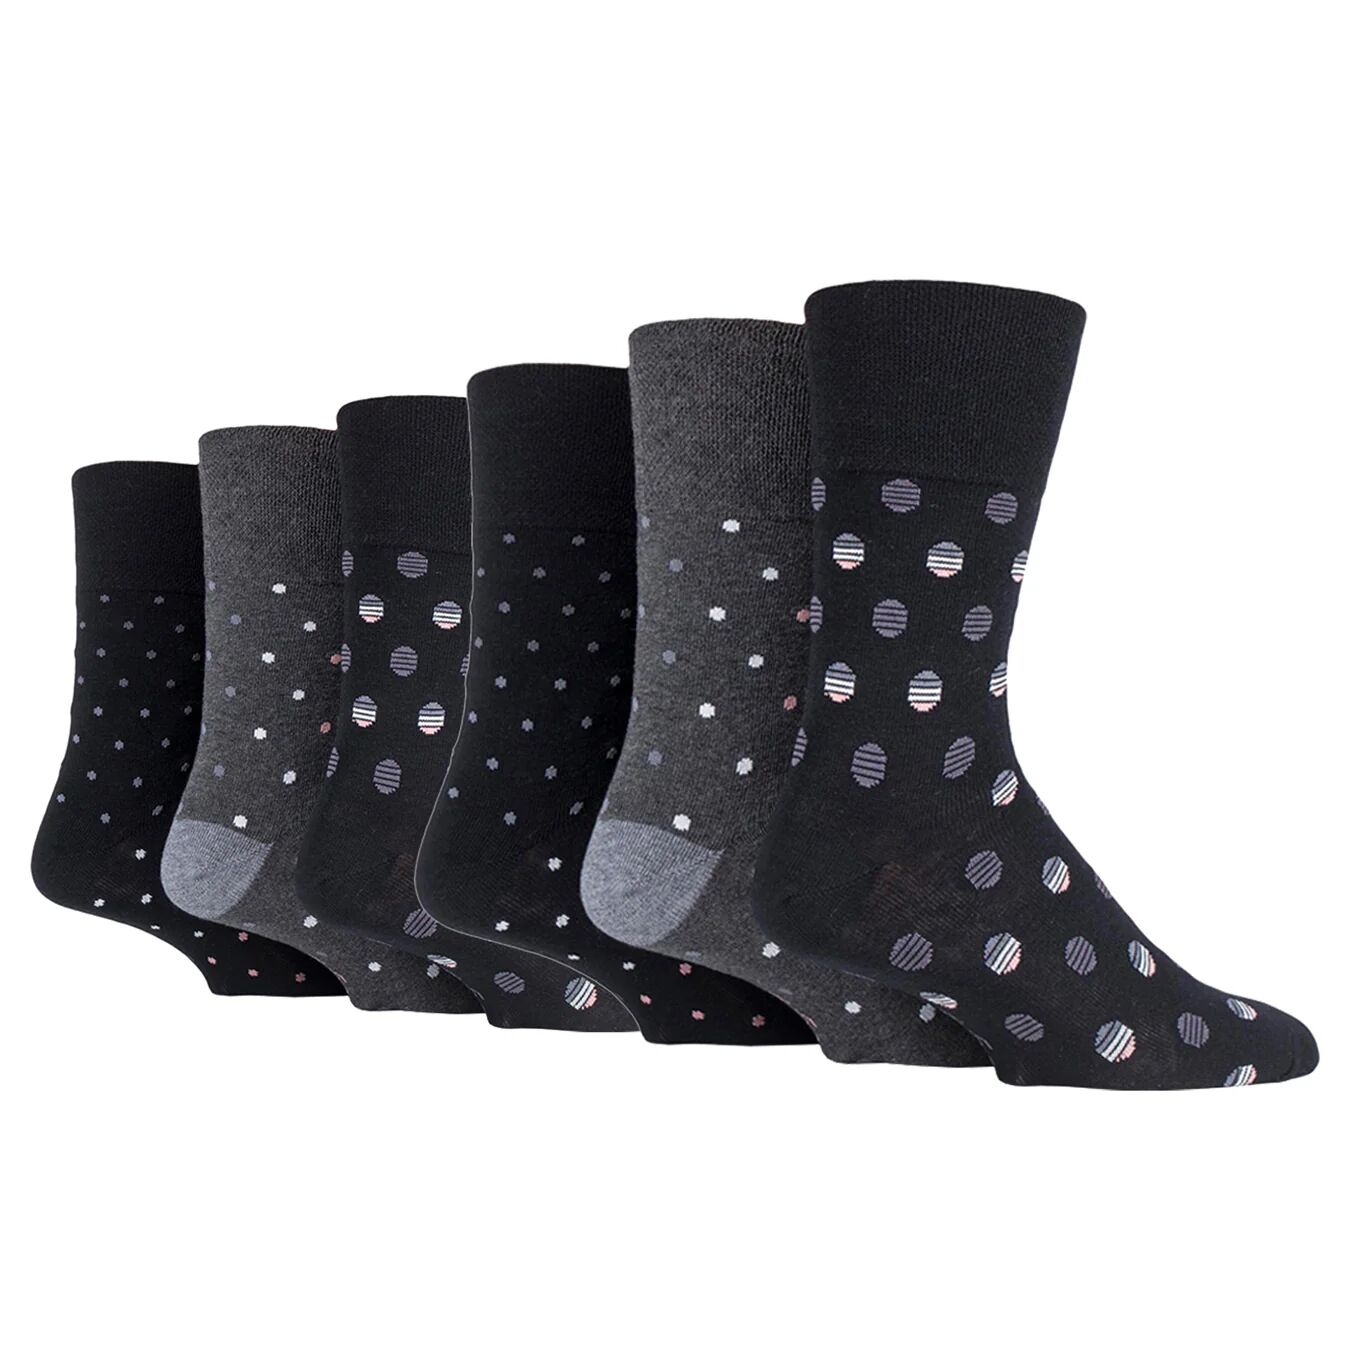 6 Pairs Ladies Plus Size Gentle Grip Cotton Socks - Polka Pop Black/Charcoal female